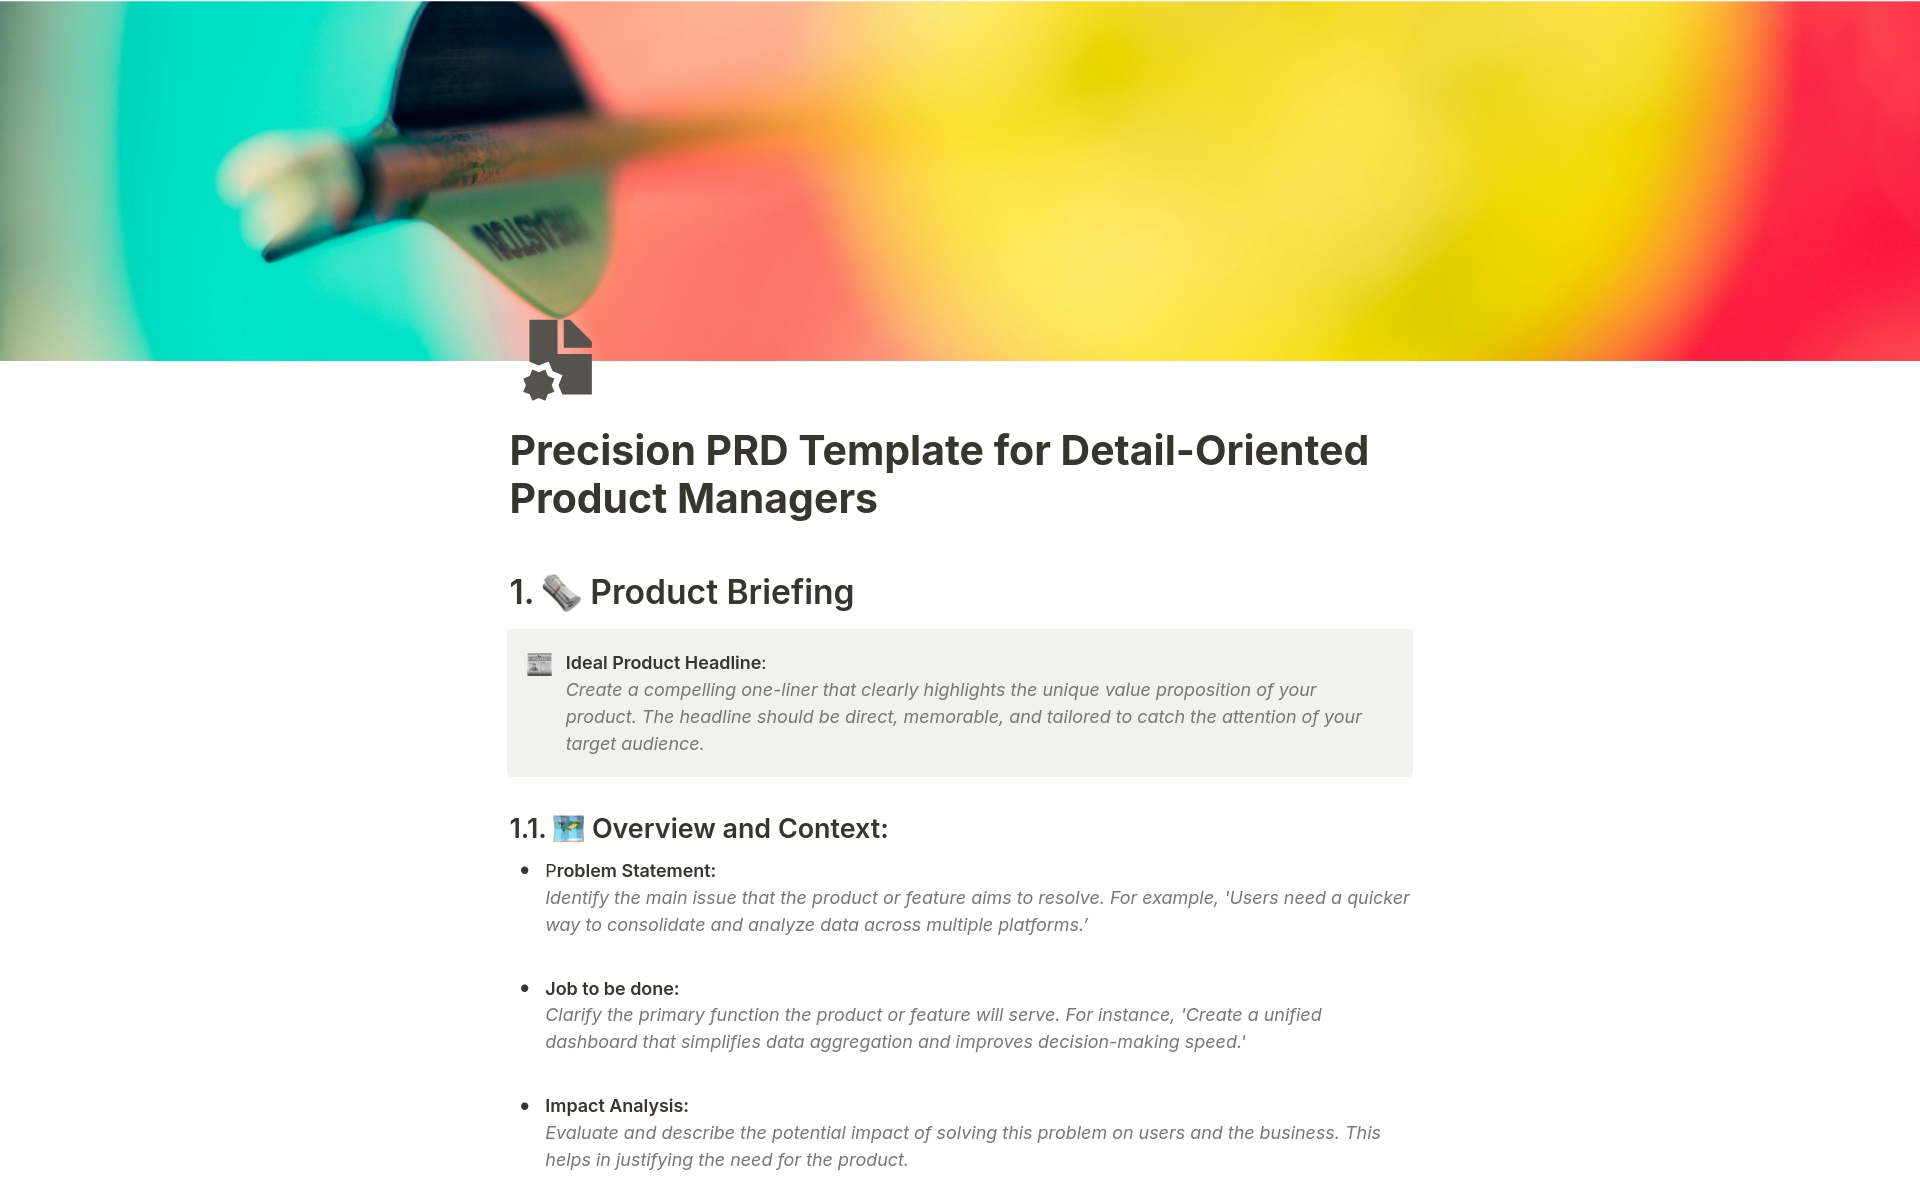 Vista previa de una plantilla para Precision PRD Template for Detail-Oriented PMs